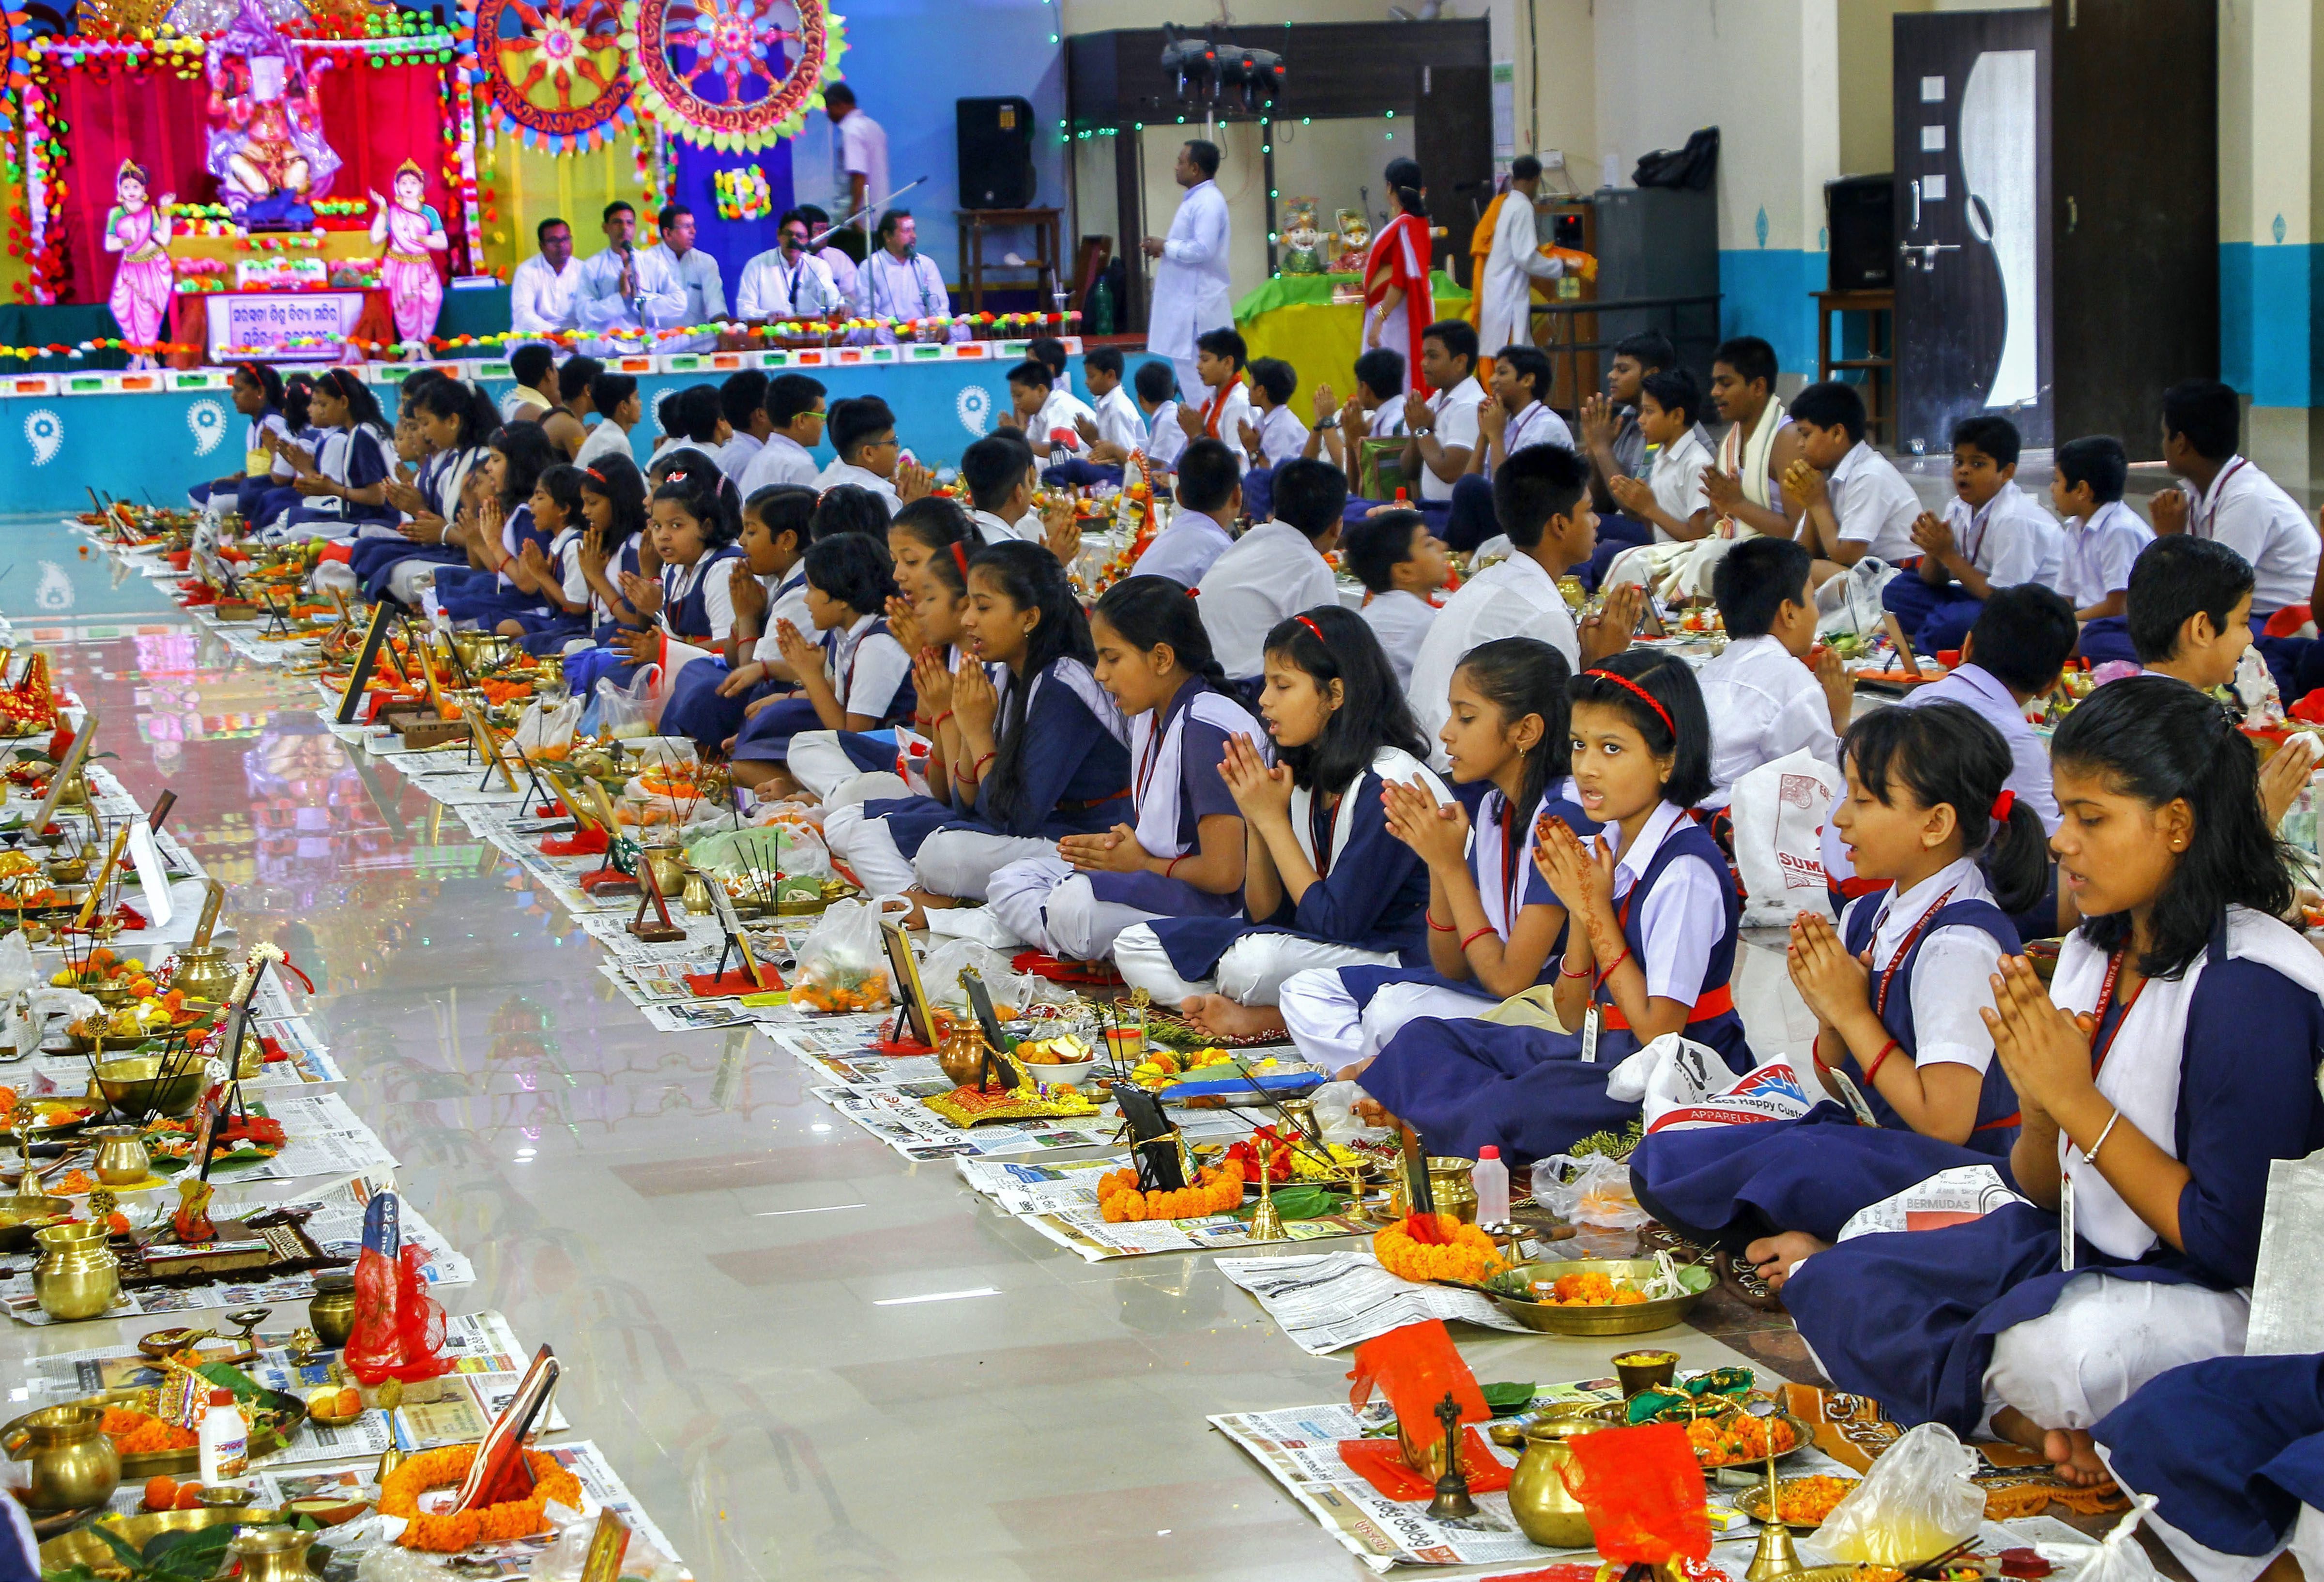 Students perform mass 'Puja' at Swaraswati Bidya Mandir on occasion of 'Ganesh Chaturthi' festival, in Bhubaneswar - PTI